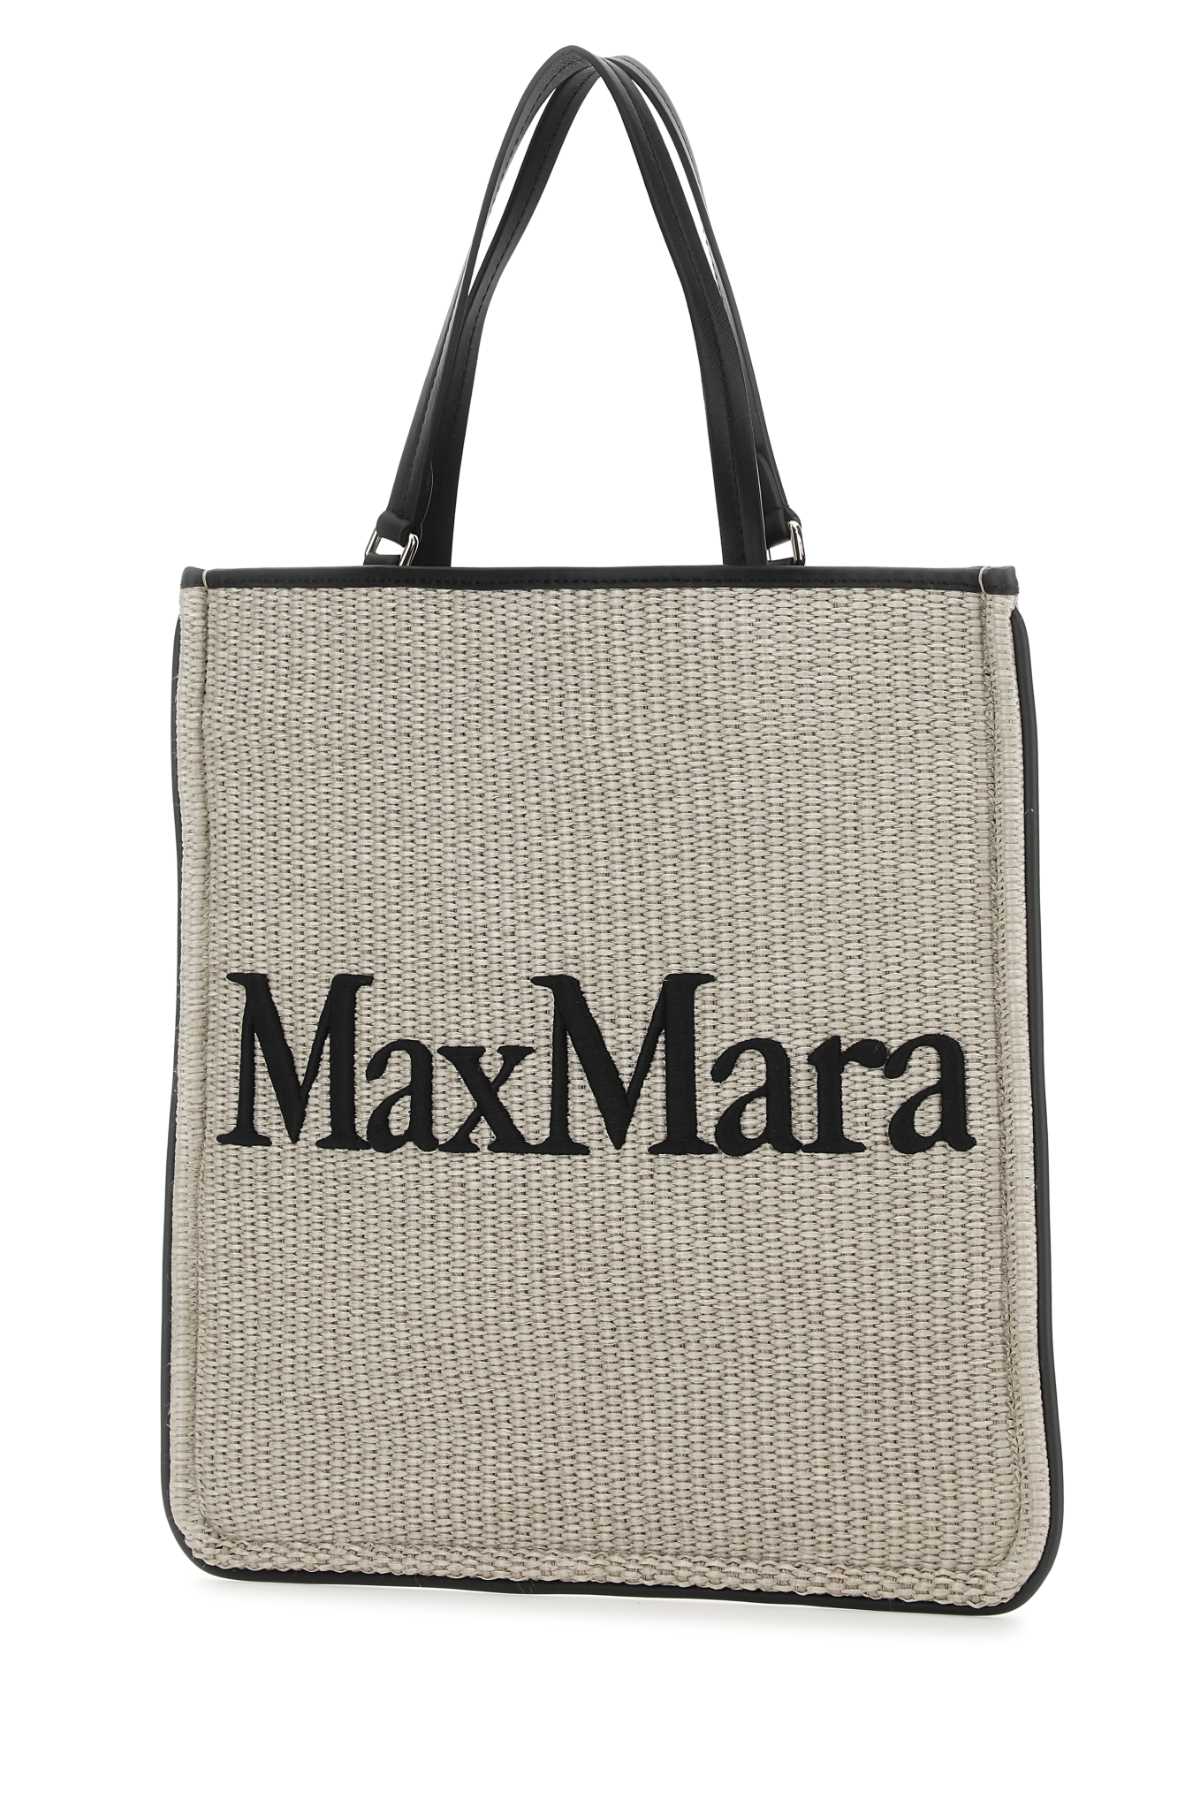 MAX MARA RAFFIA EASYBAG SHOPPING BAG